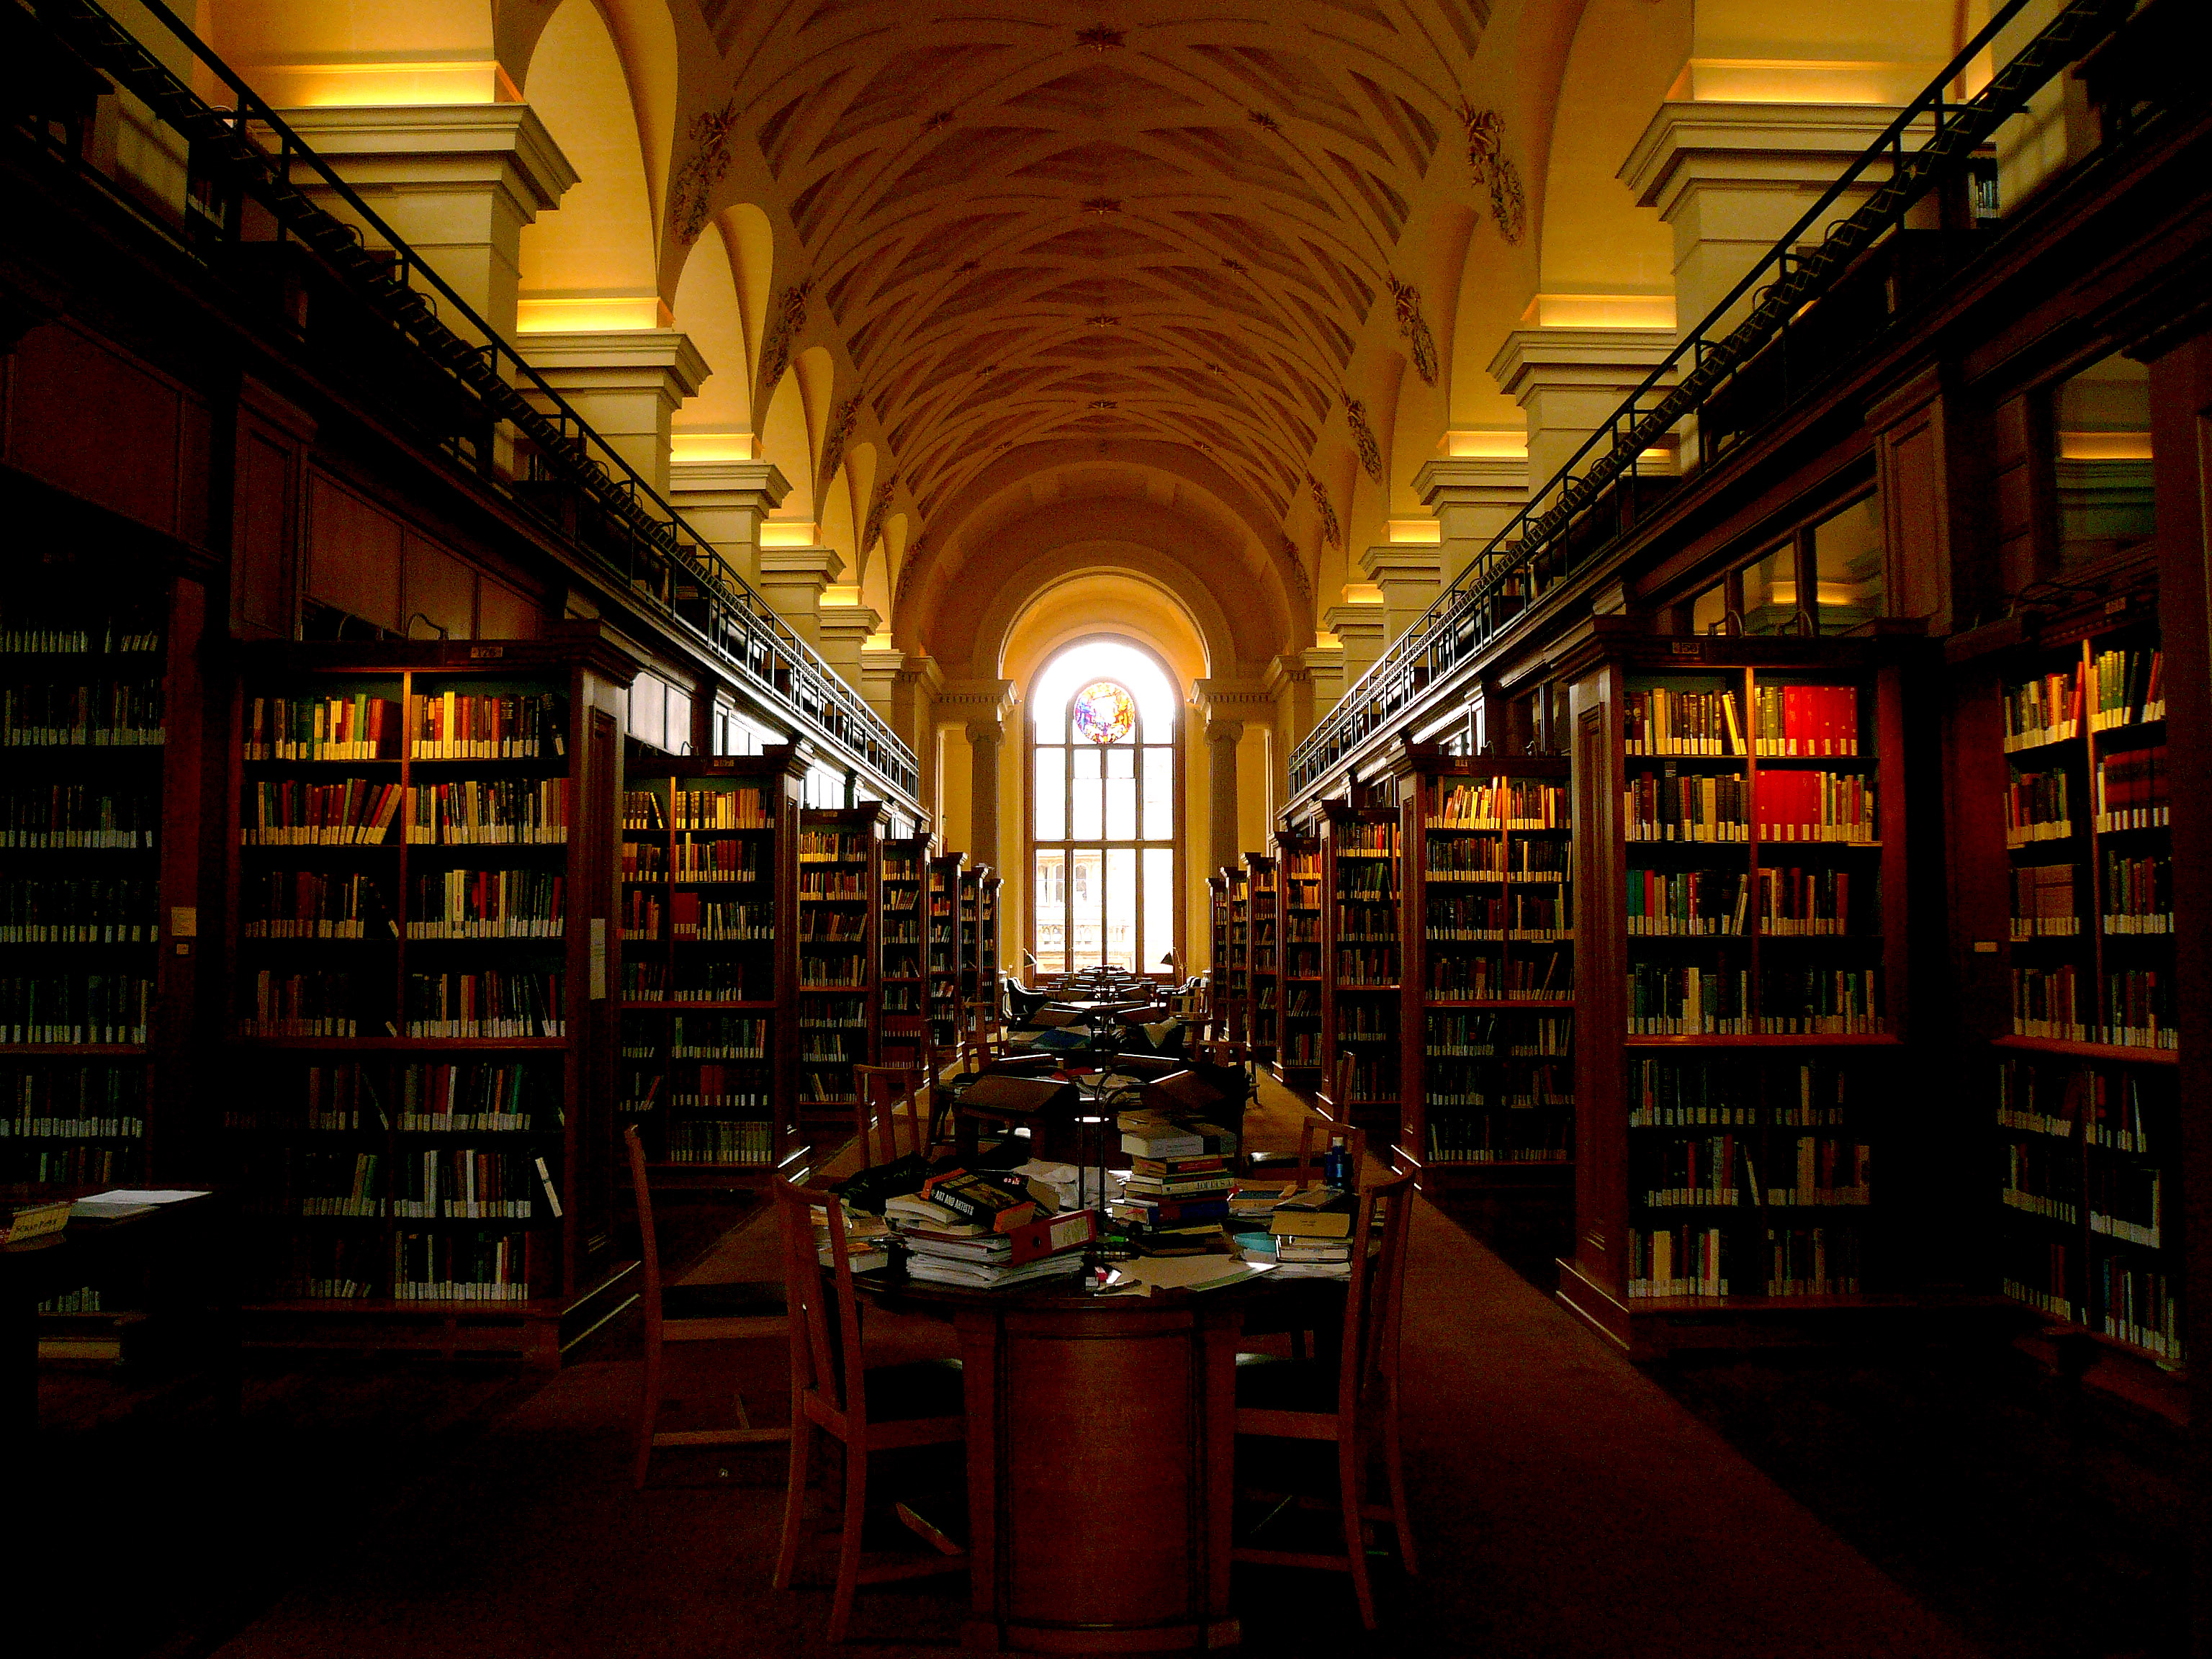 Library messages. Библиотека Кембриджского университета. Кембриджская Университетская библиотека. Кембридж университет библиотека. Кембриджский университет внутри библиотека.